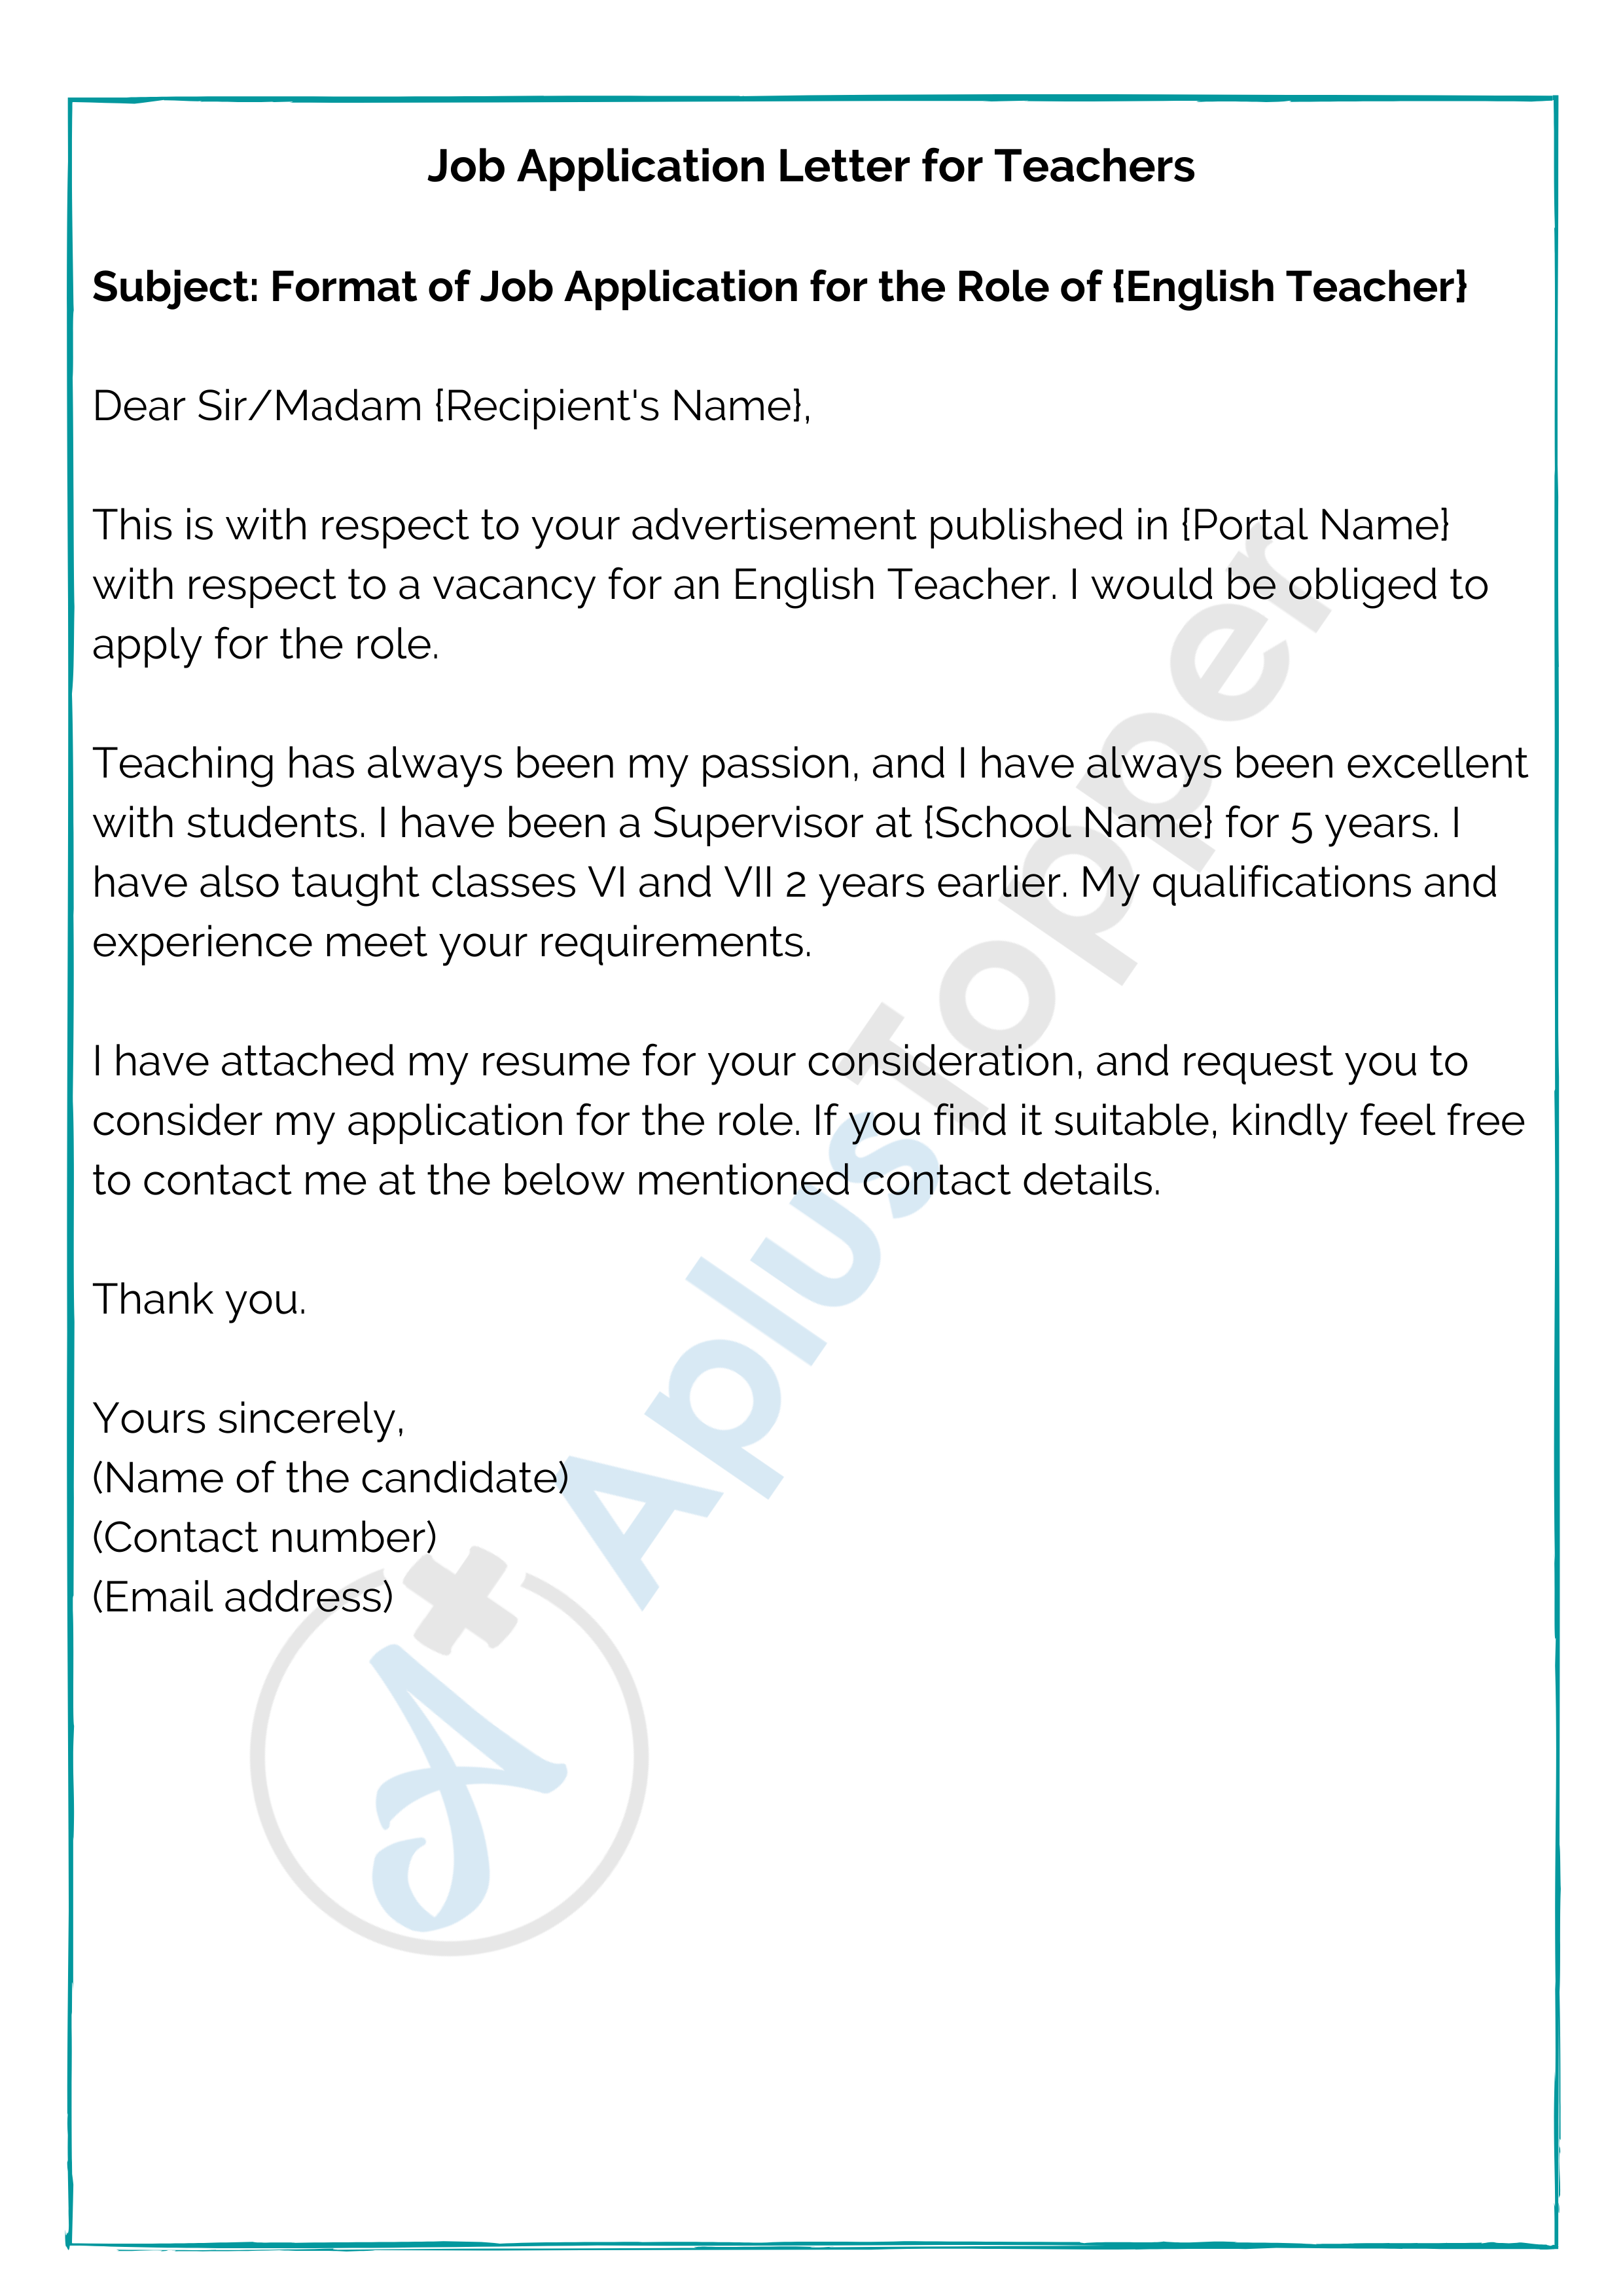 formats of job application letter